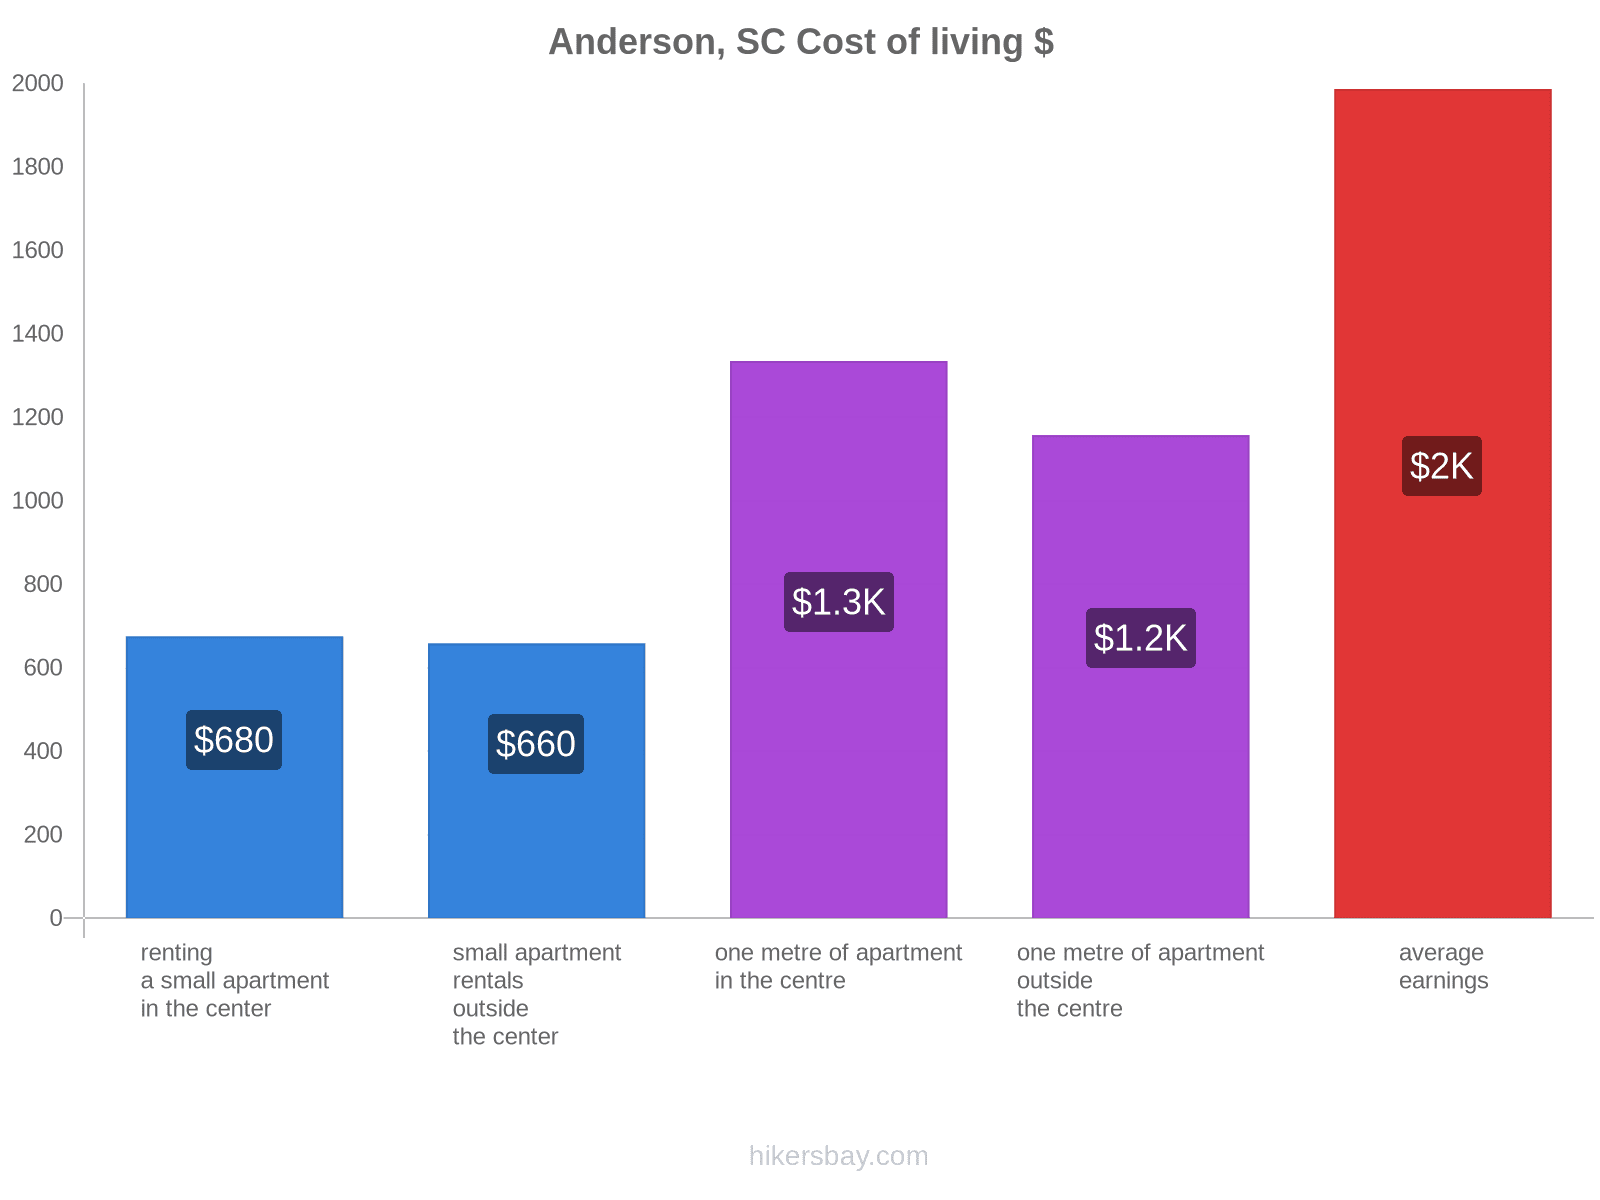 Anderson, SC cost of living hikersbay.com